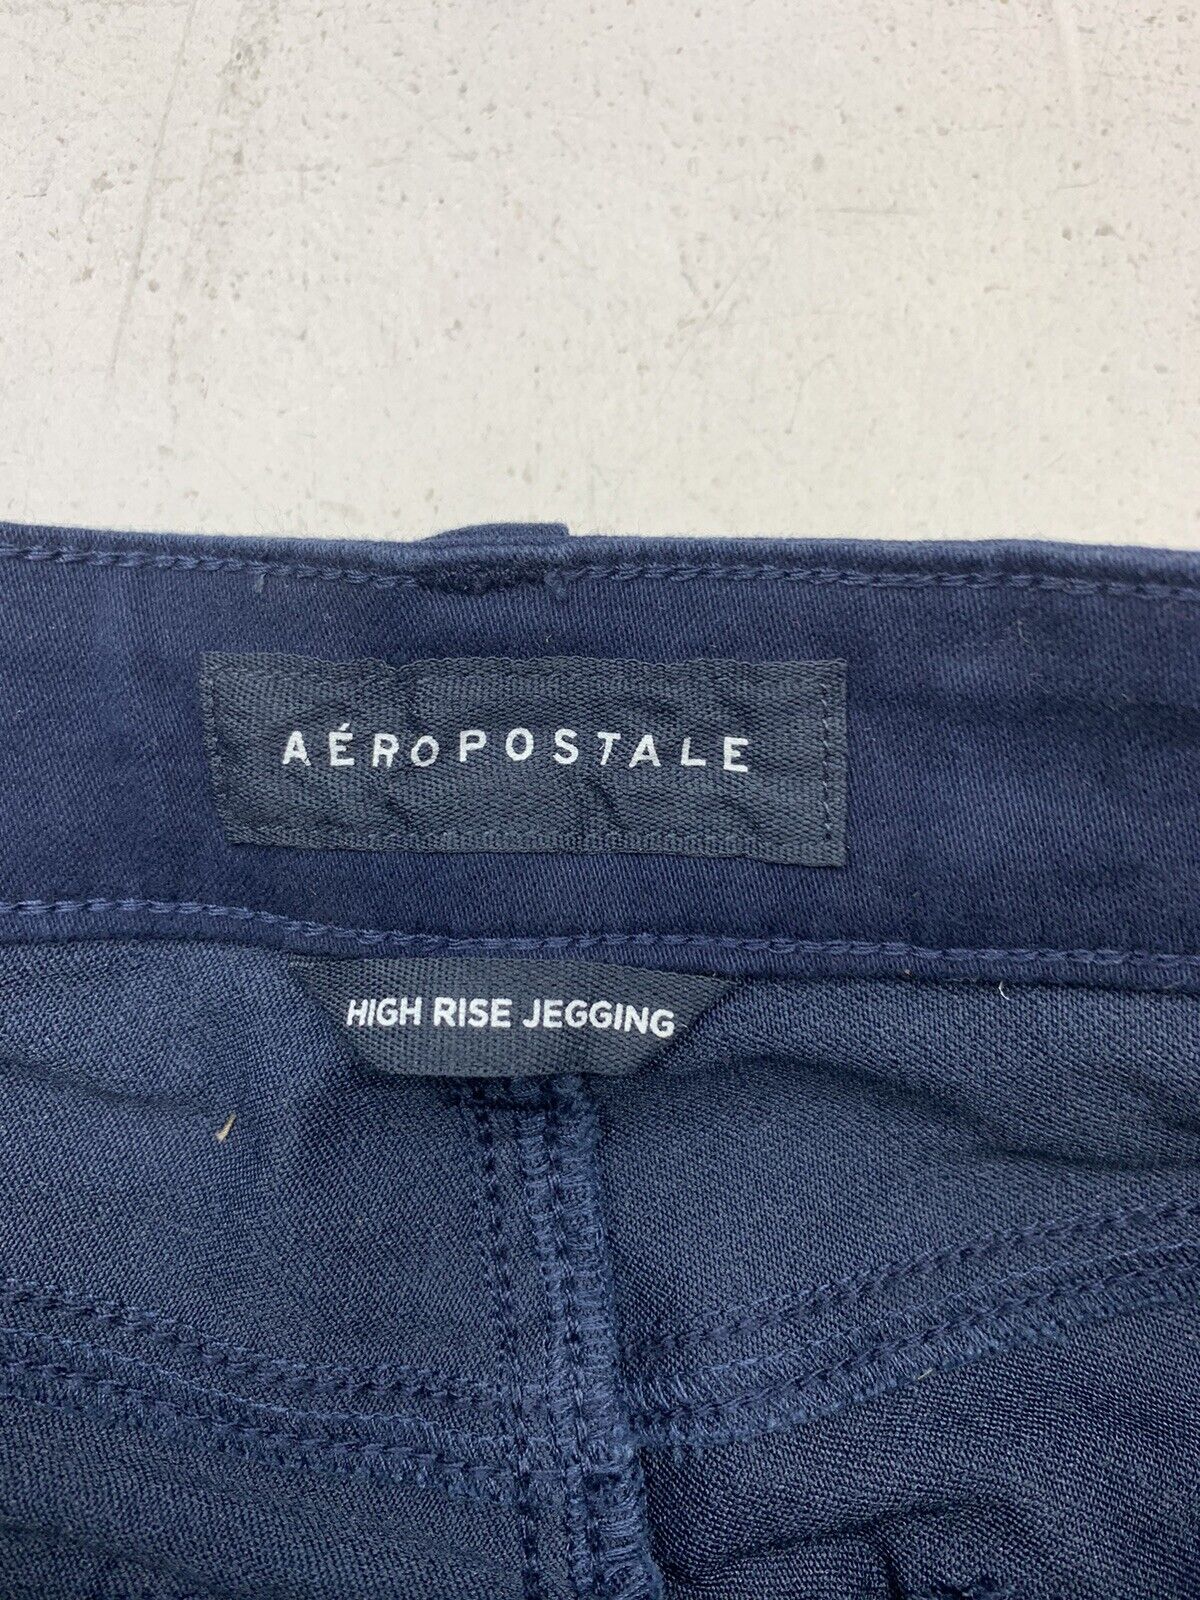 Aeropostale Womens Dark Blue High Rise Jegging Size 6R - beyond exchange